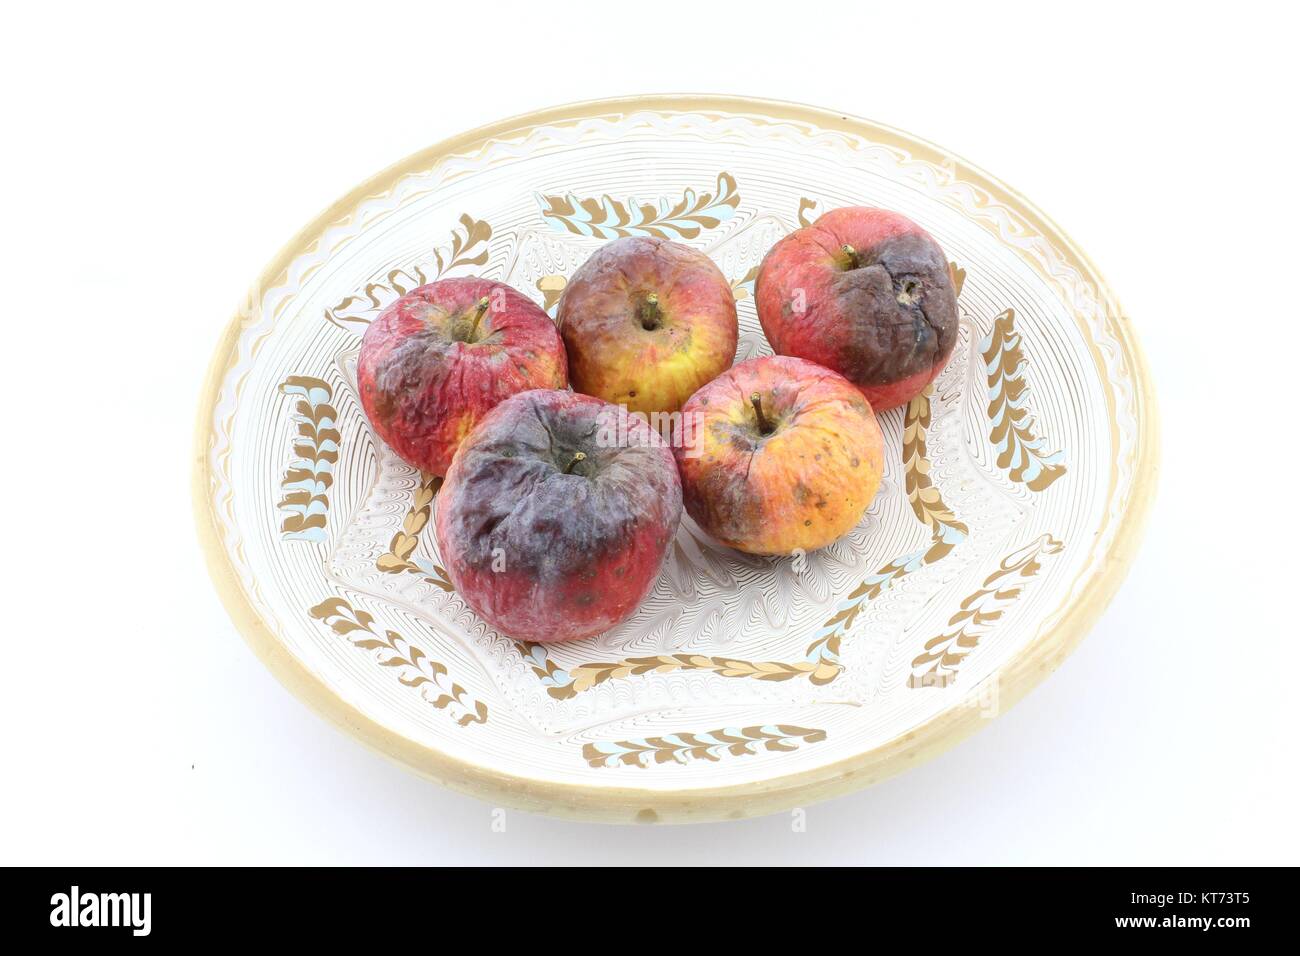 Rotten apple on decorative plate Stock Photo